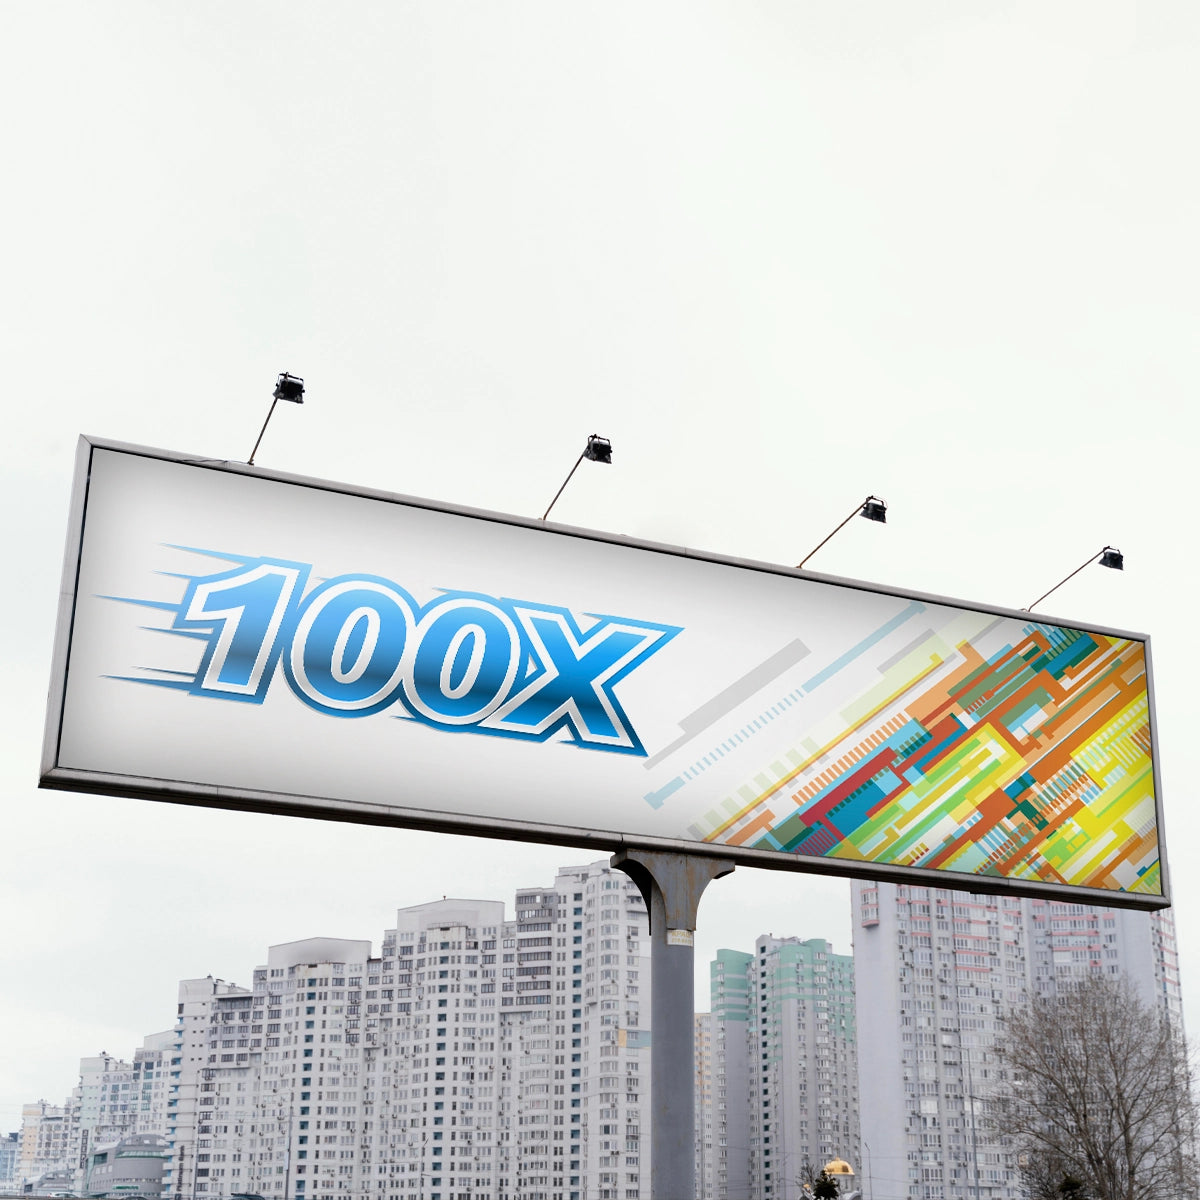 100xbiz.com